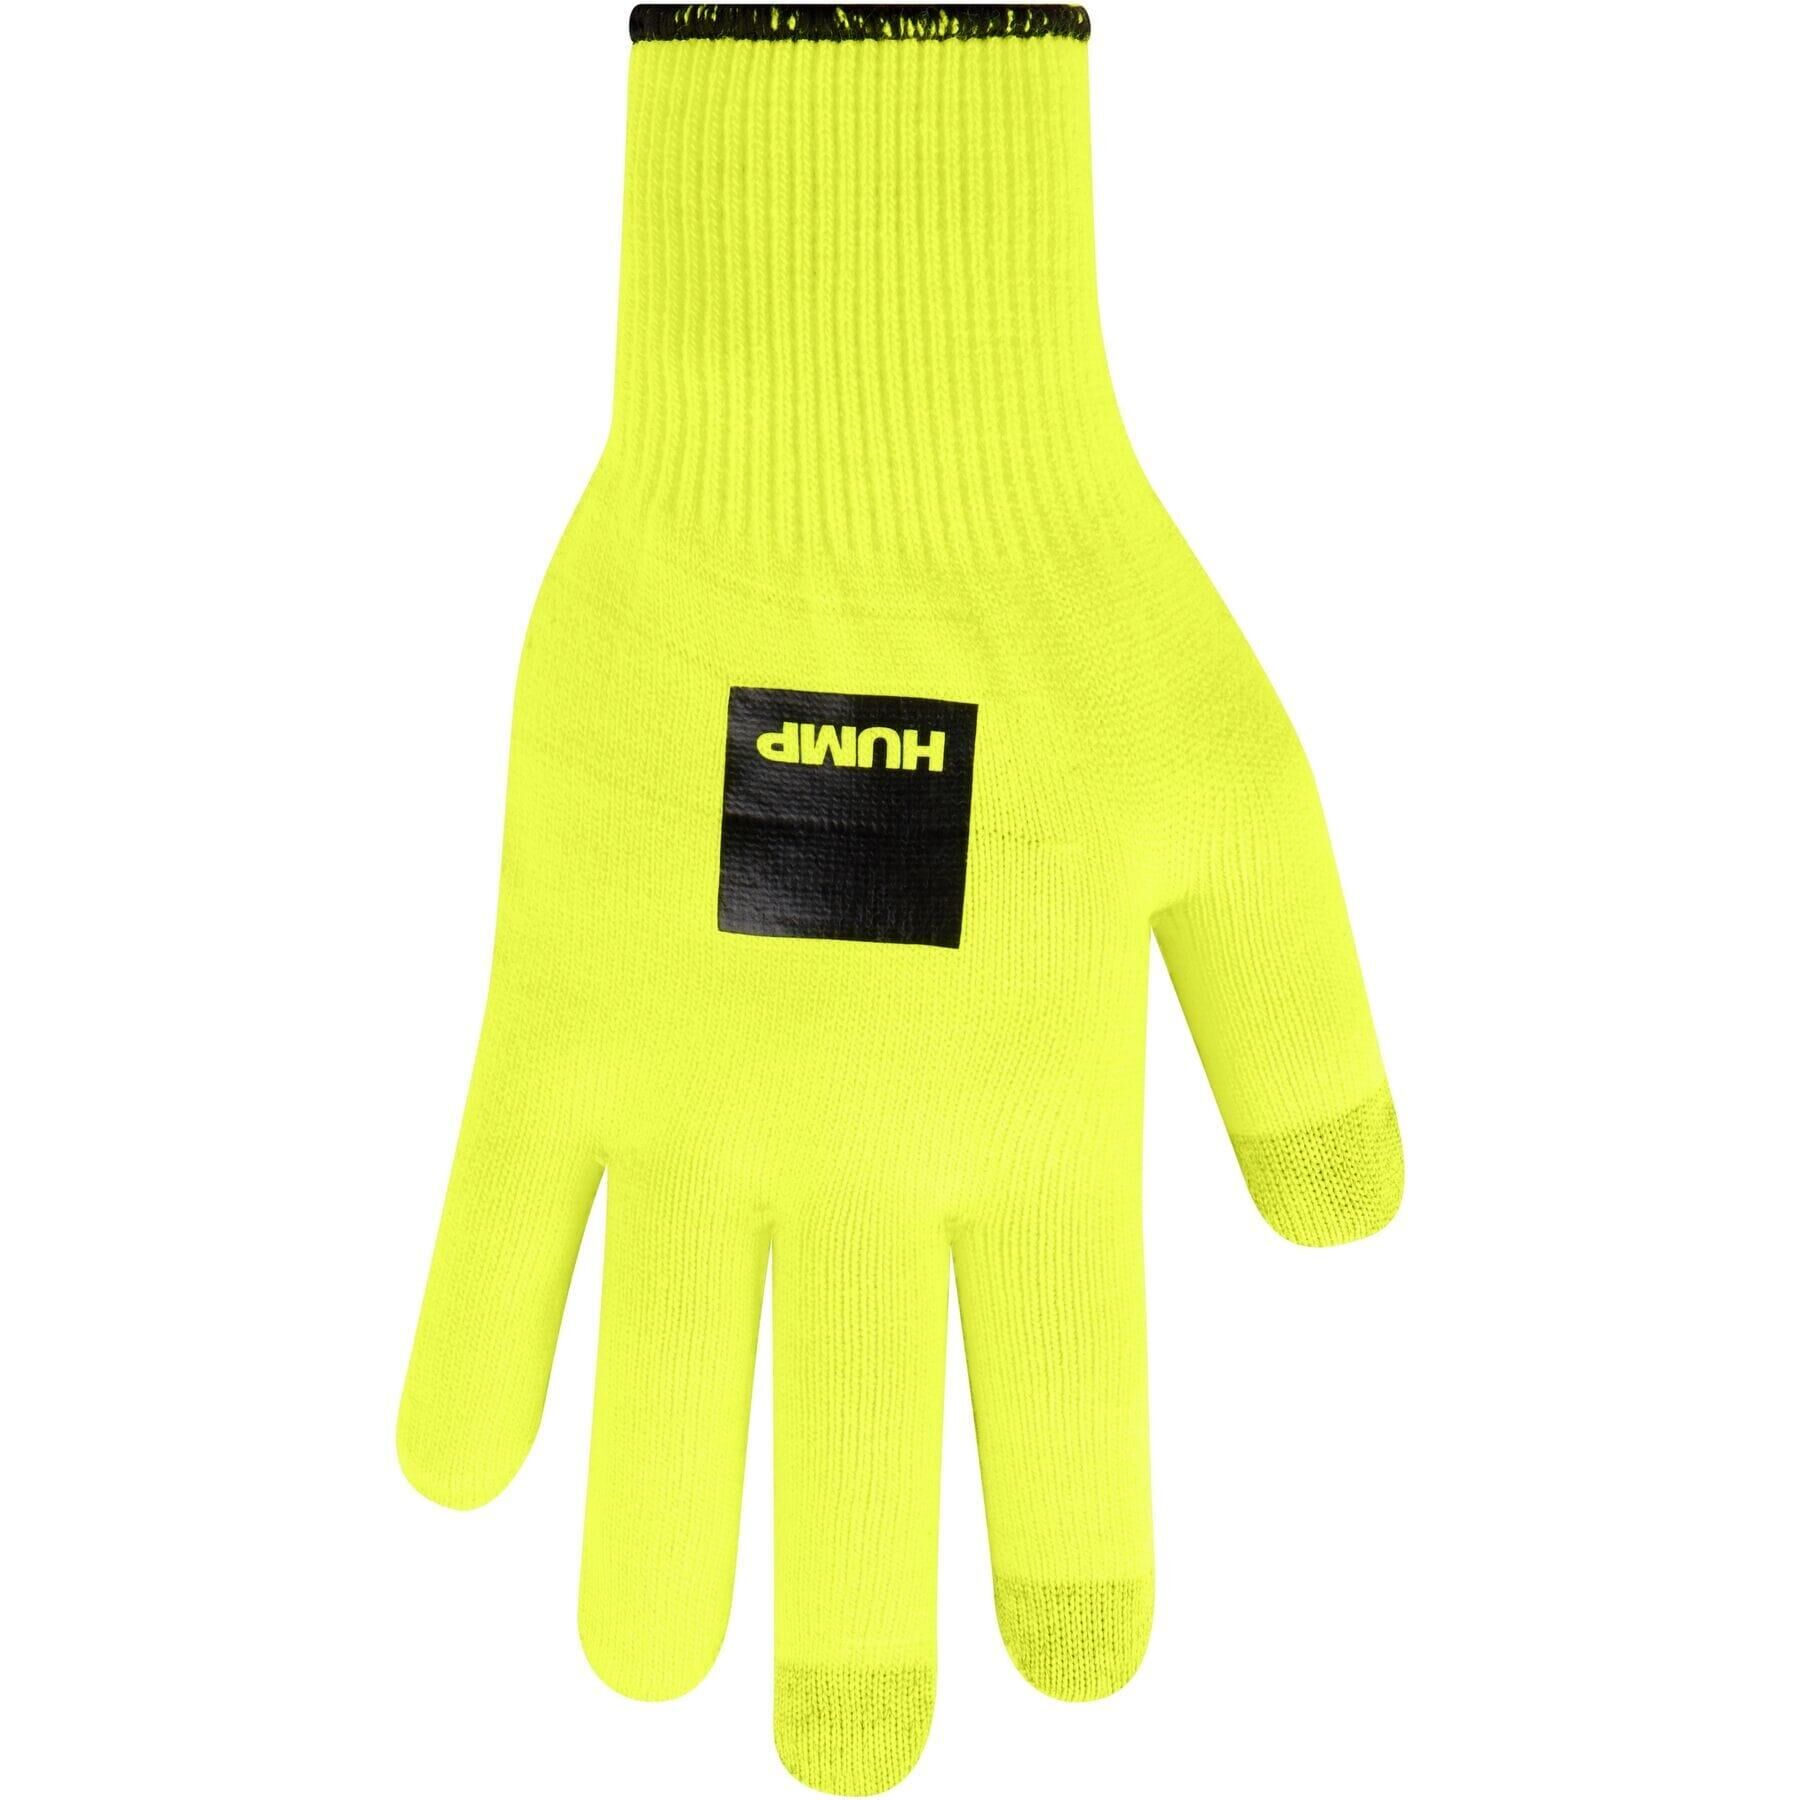 HUMP HUMP Pocket Thermal Glove - Black / Hi-Viz Yellow - X-Large - XX-Large